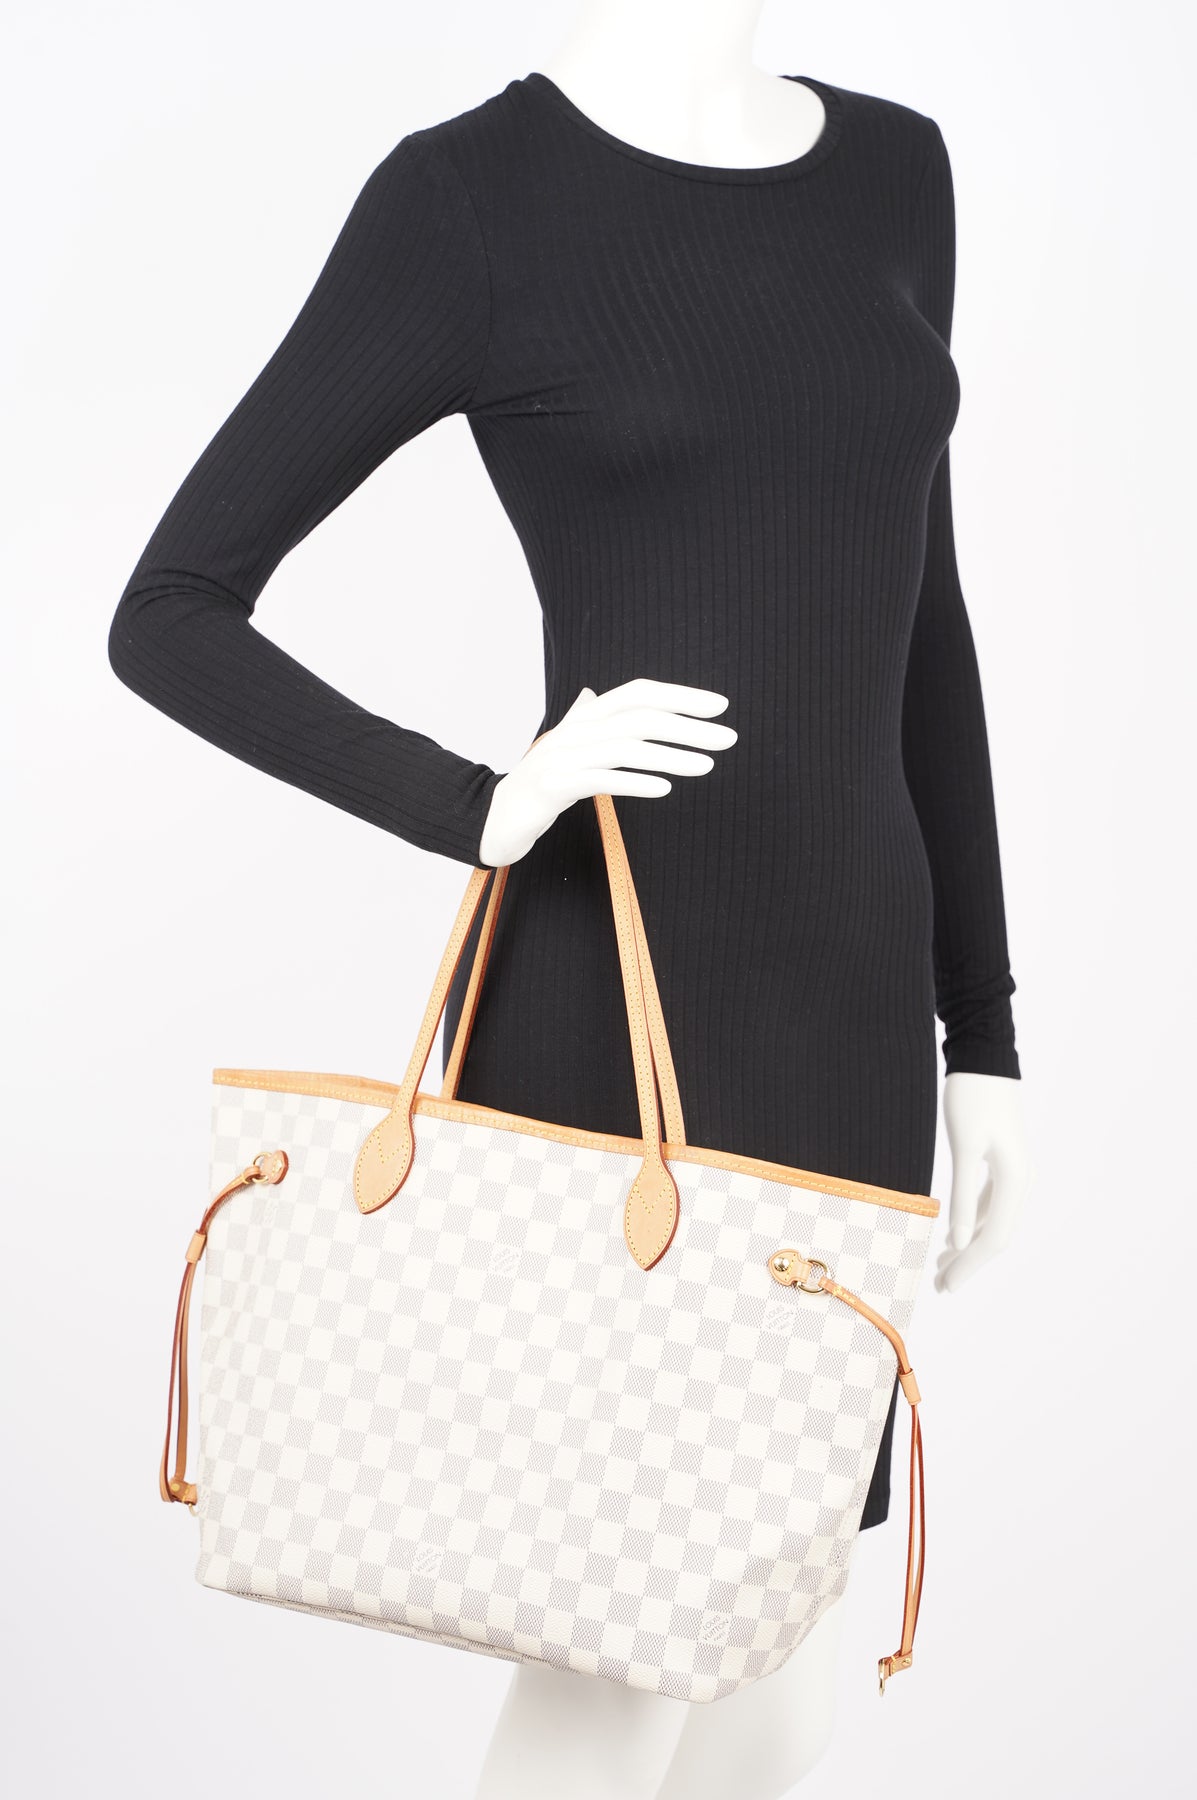 Louis Vuitton Neverfull MM Damier Azur Tote Bag Women